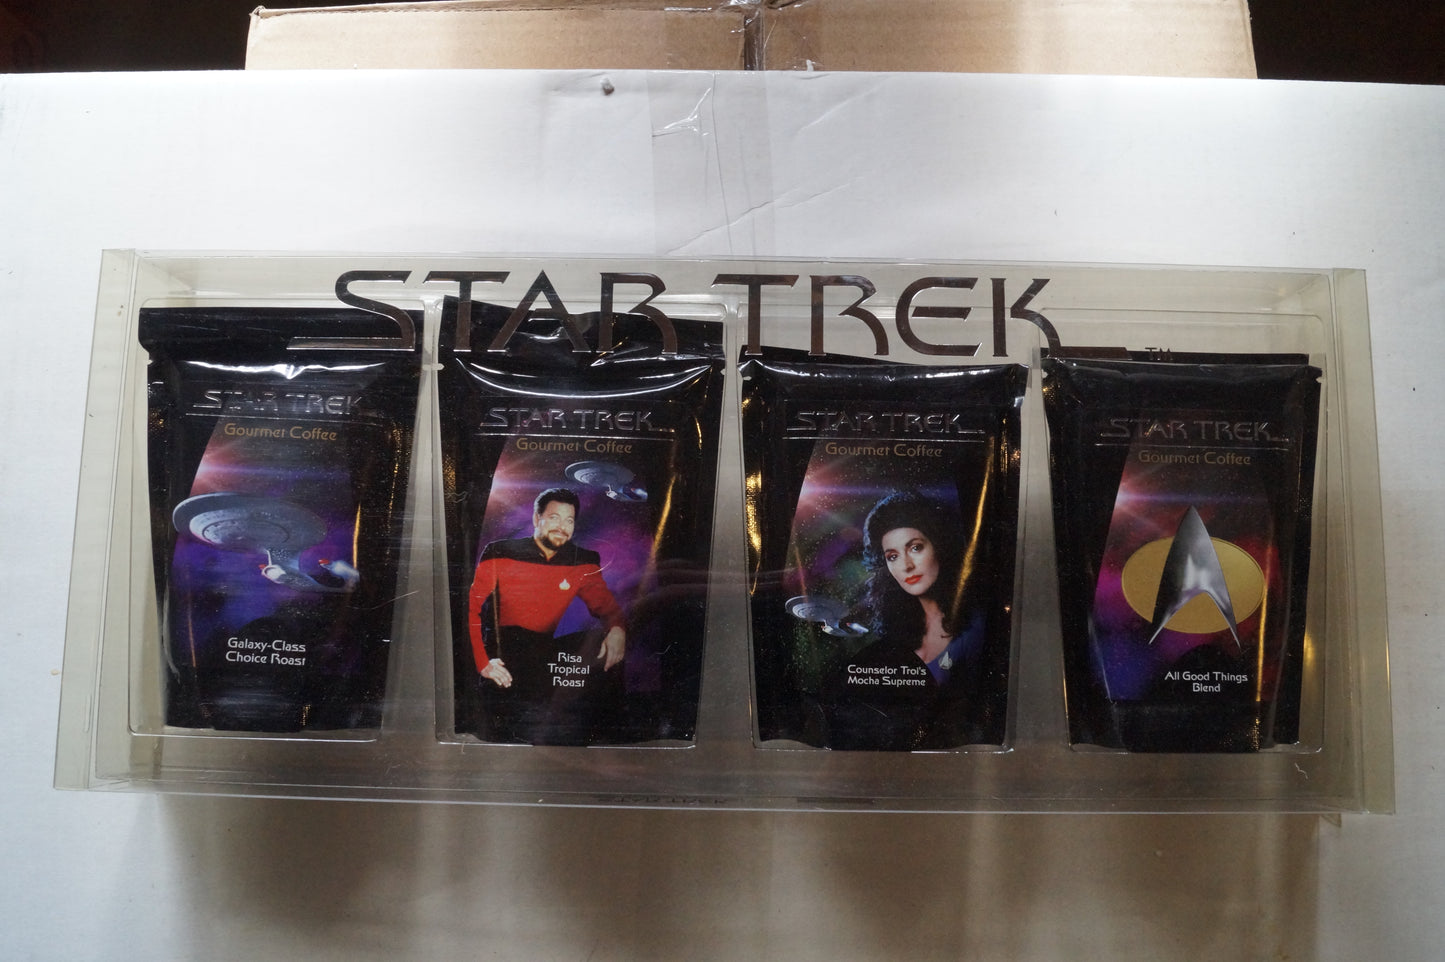 Star Trek The Next Generation Coffee Blends